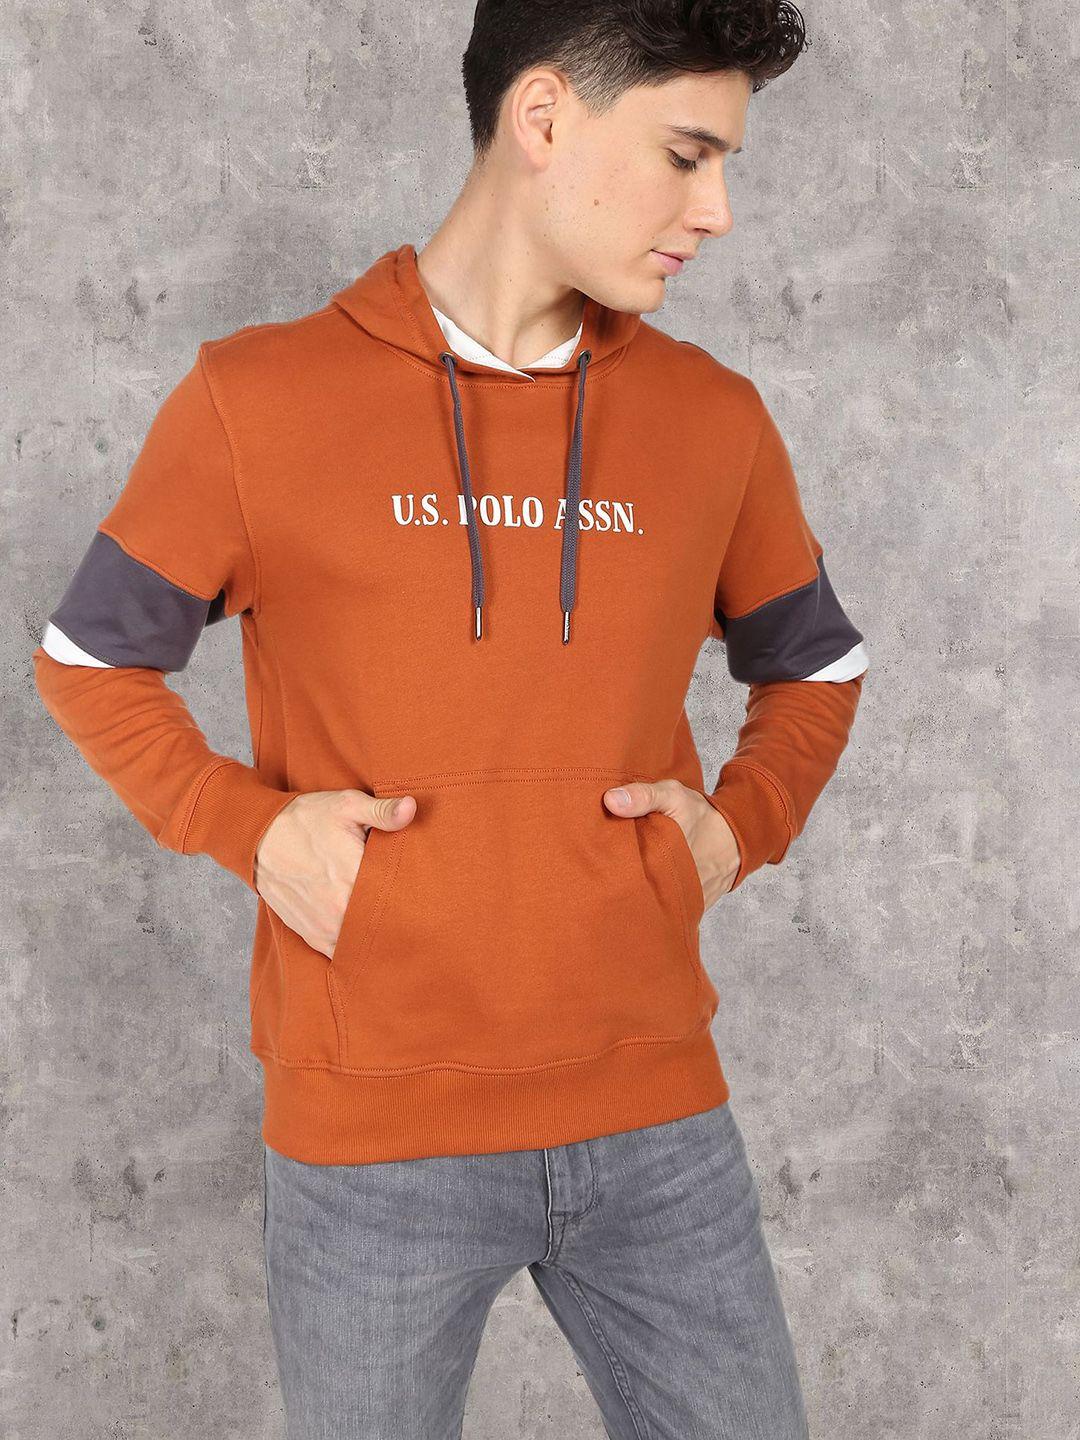 u.s.-polo-assn.-denim-co.-men-brown-printed-hooded-pure-cotton-sweatshirt